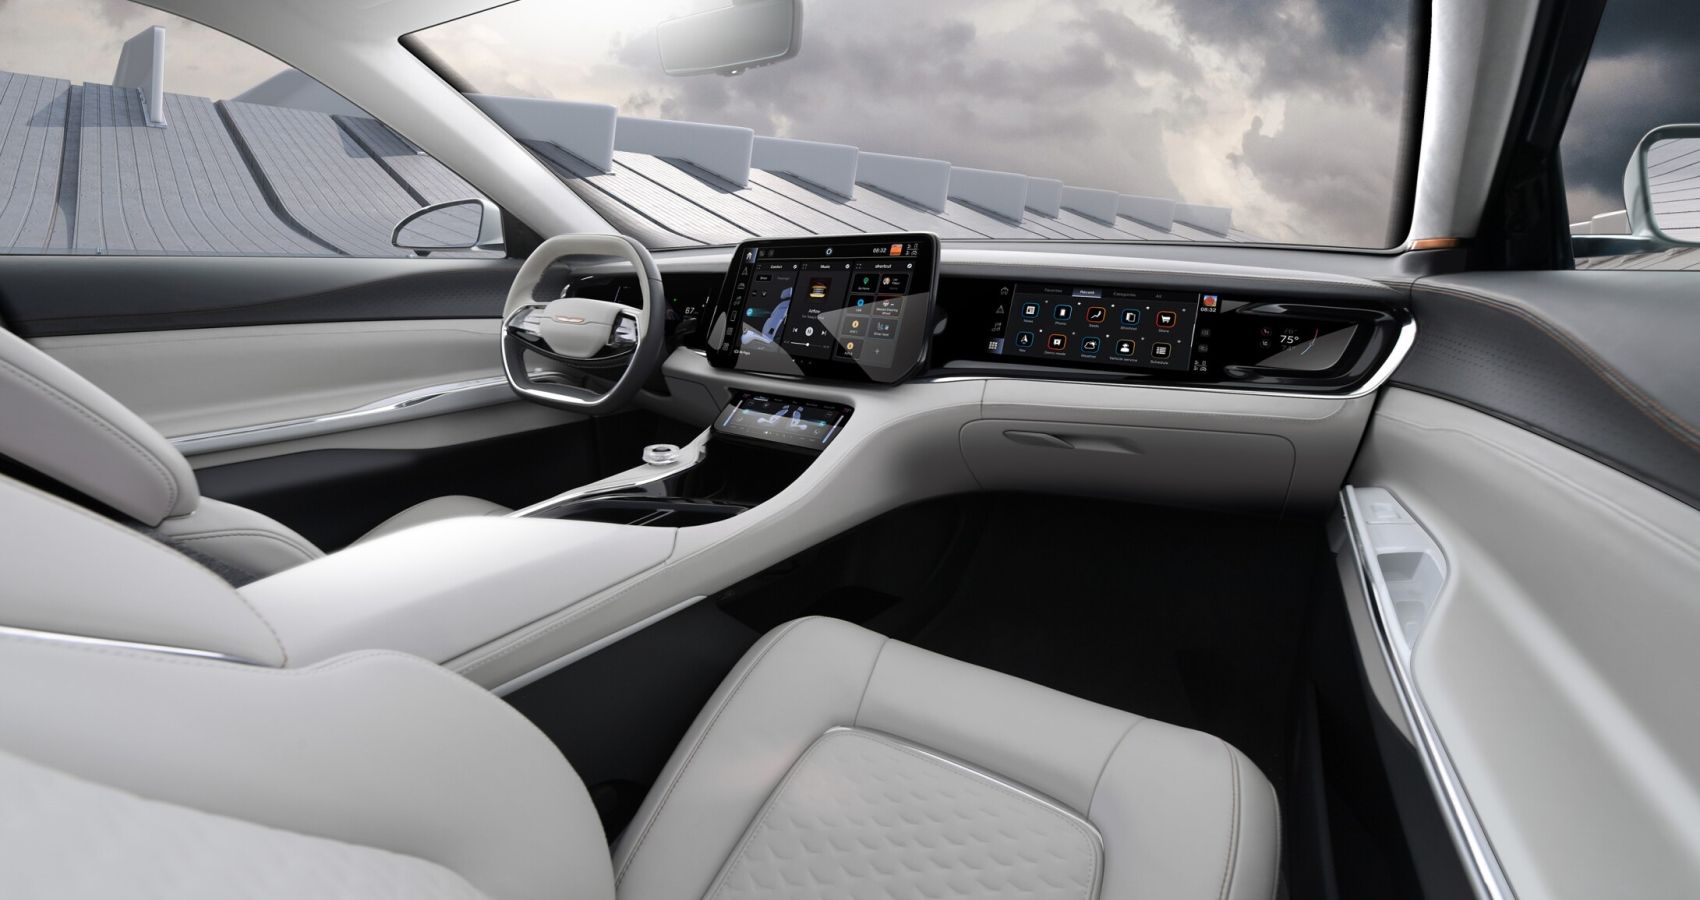 Chrysler Airflow Concept Interior Looks Ravishing